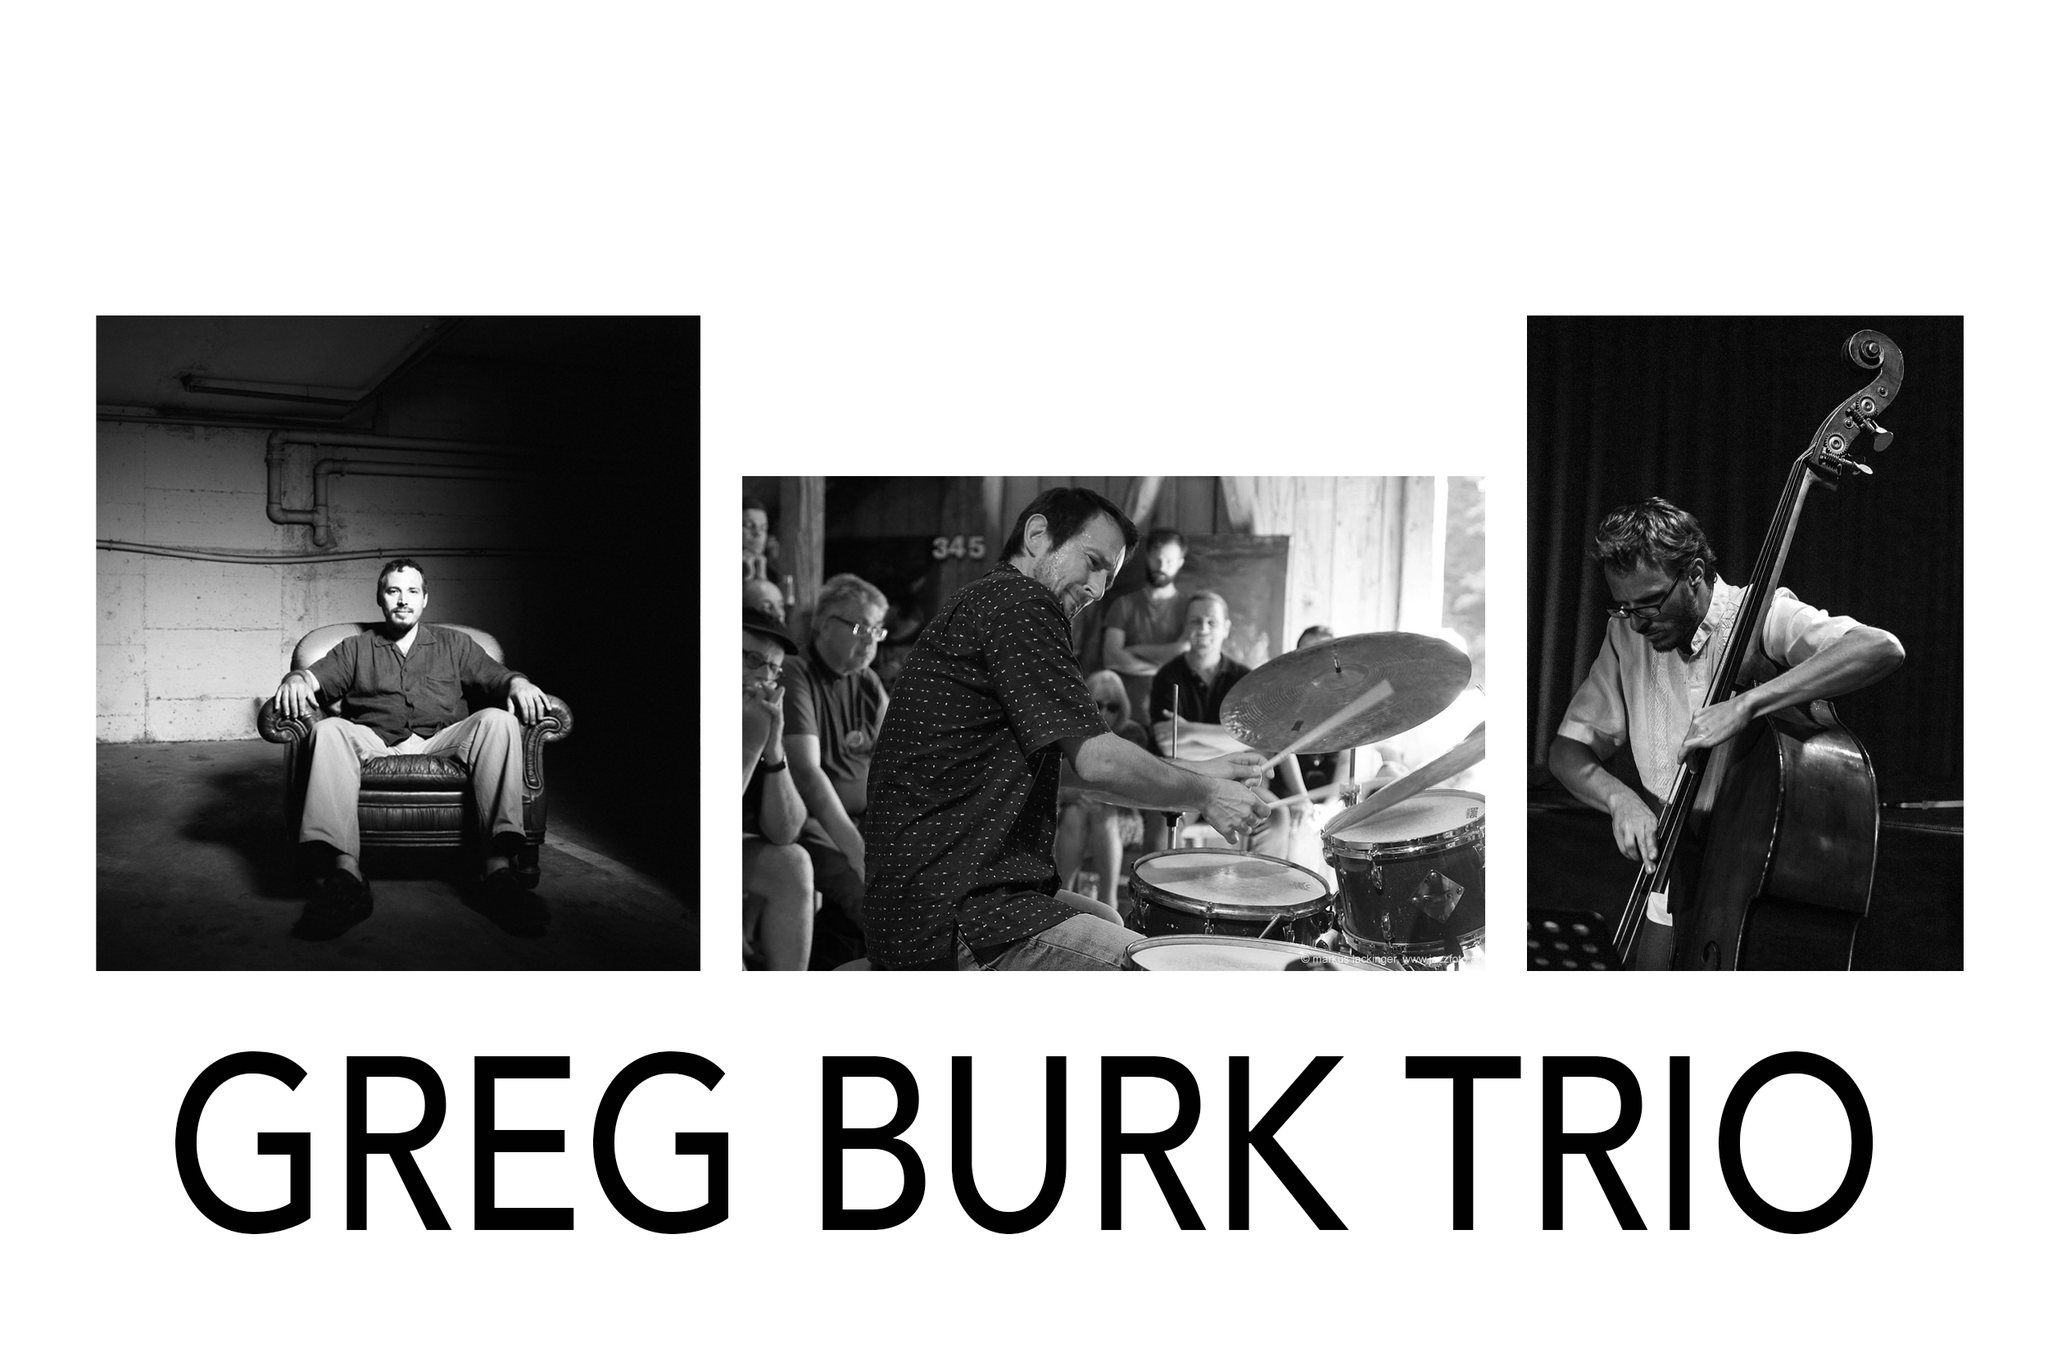 Greg Burk Trio